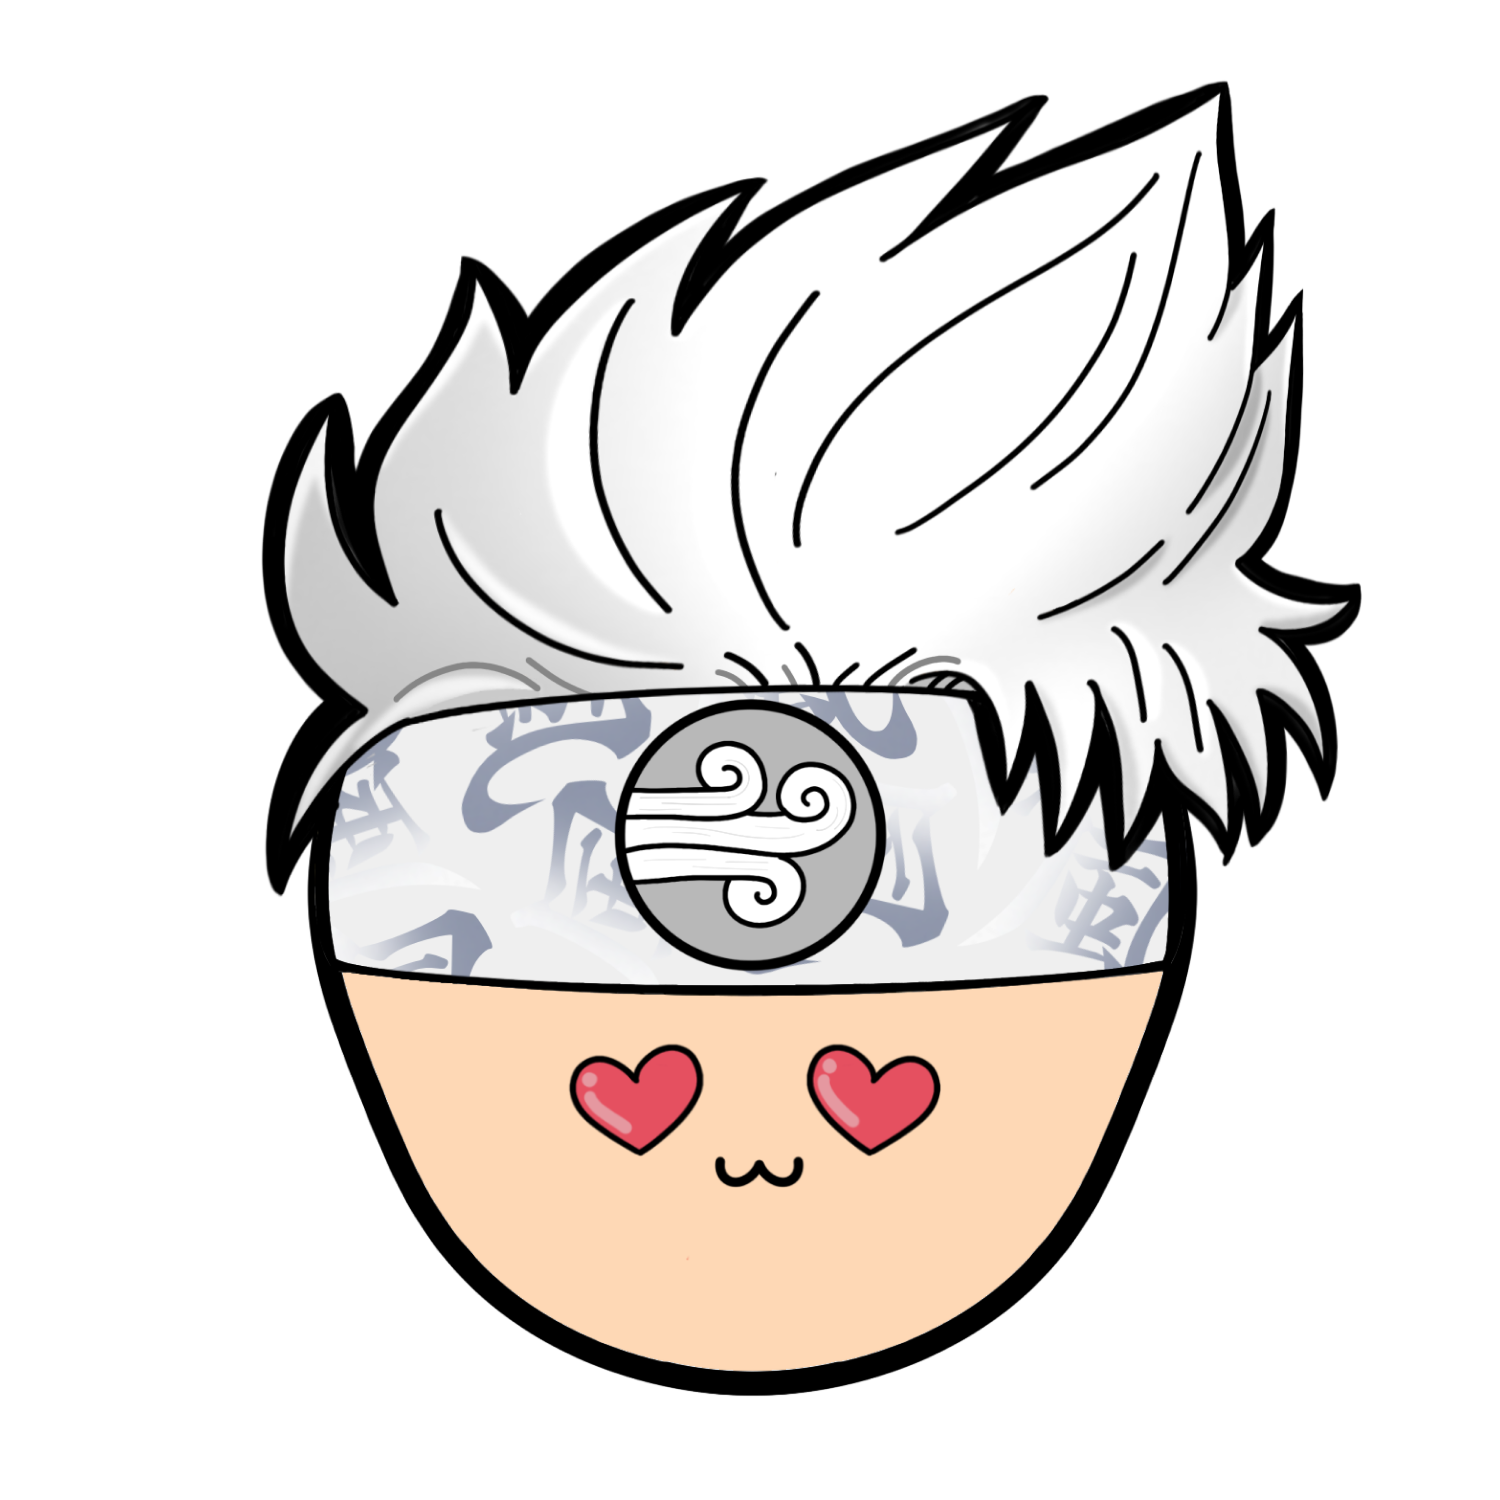 A Chibi Shinobi head